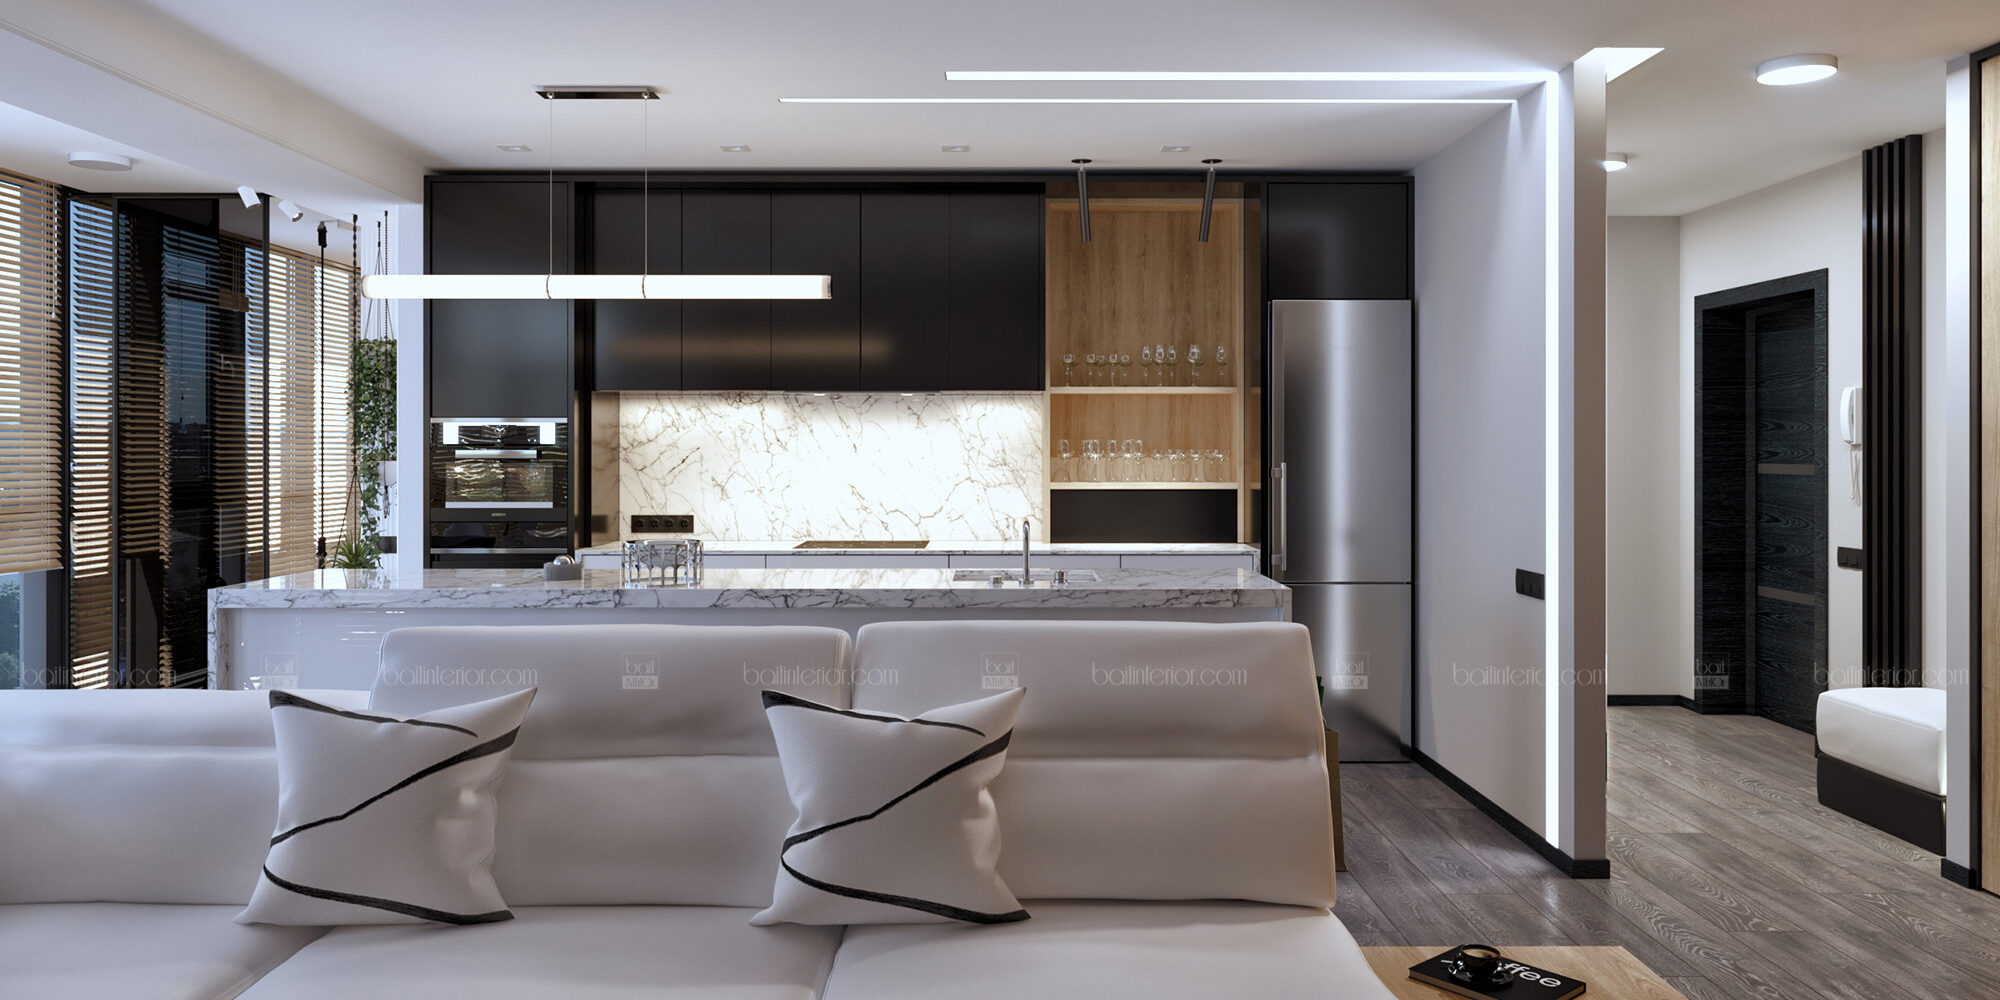 Дизайн интерьера квартиры в стиле минимализм.